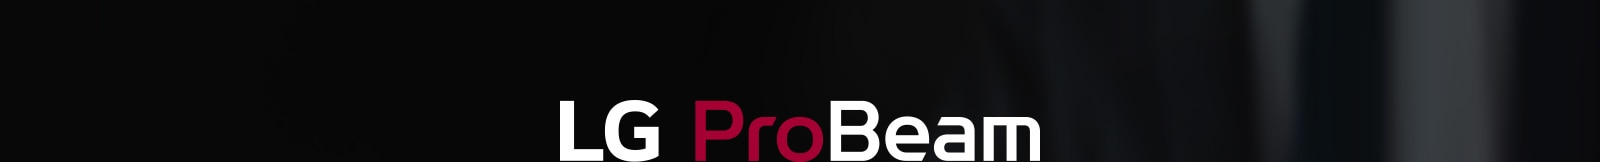 LG ProBeam / reddot winner 2020 / Laser Projector Winner 2021